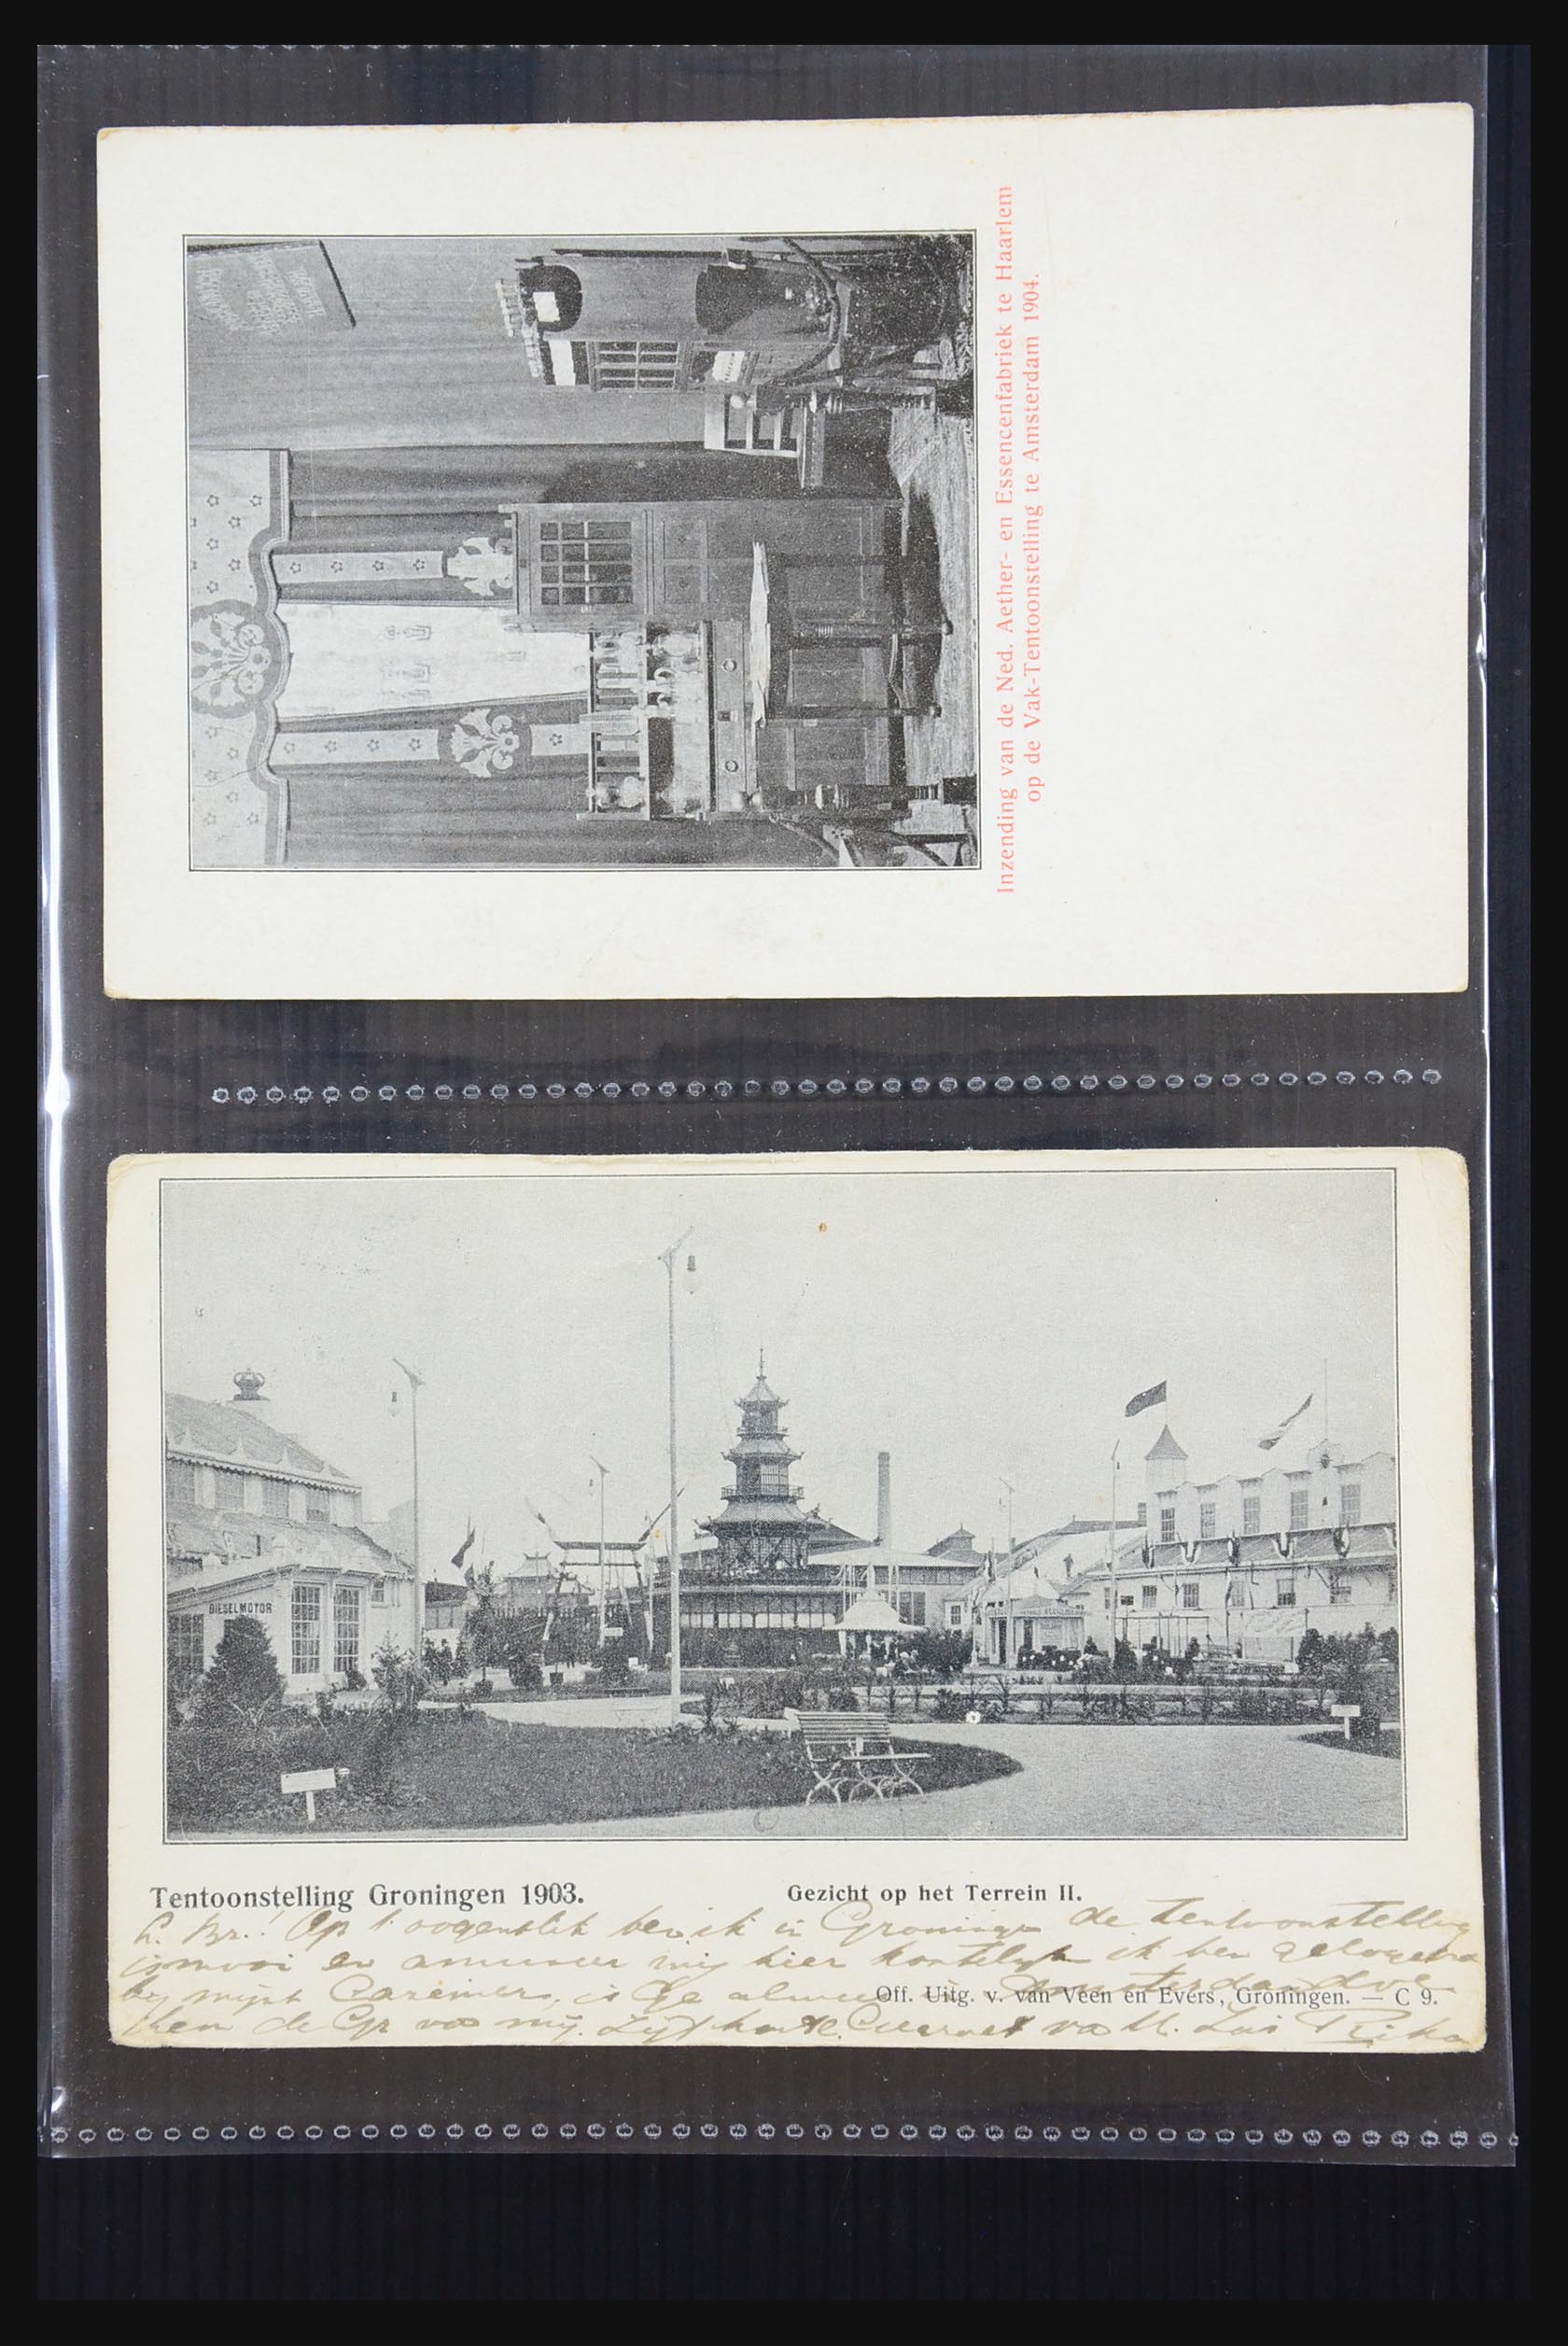 31338 005 - 31338 Netherlands picture postcards 1897-1914.